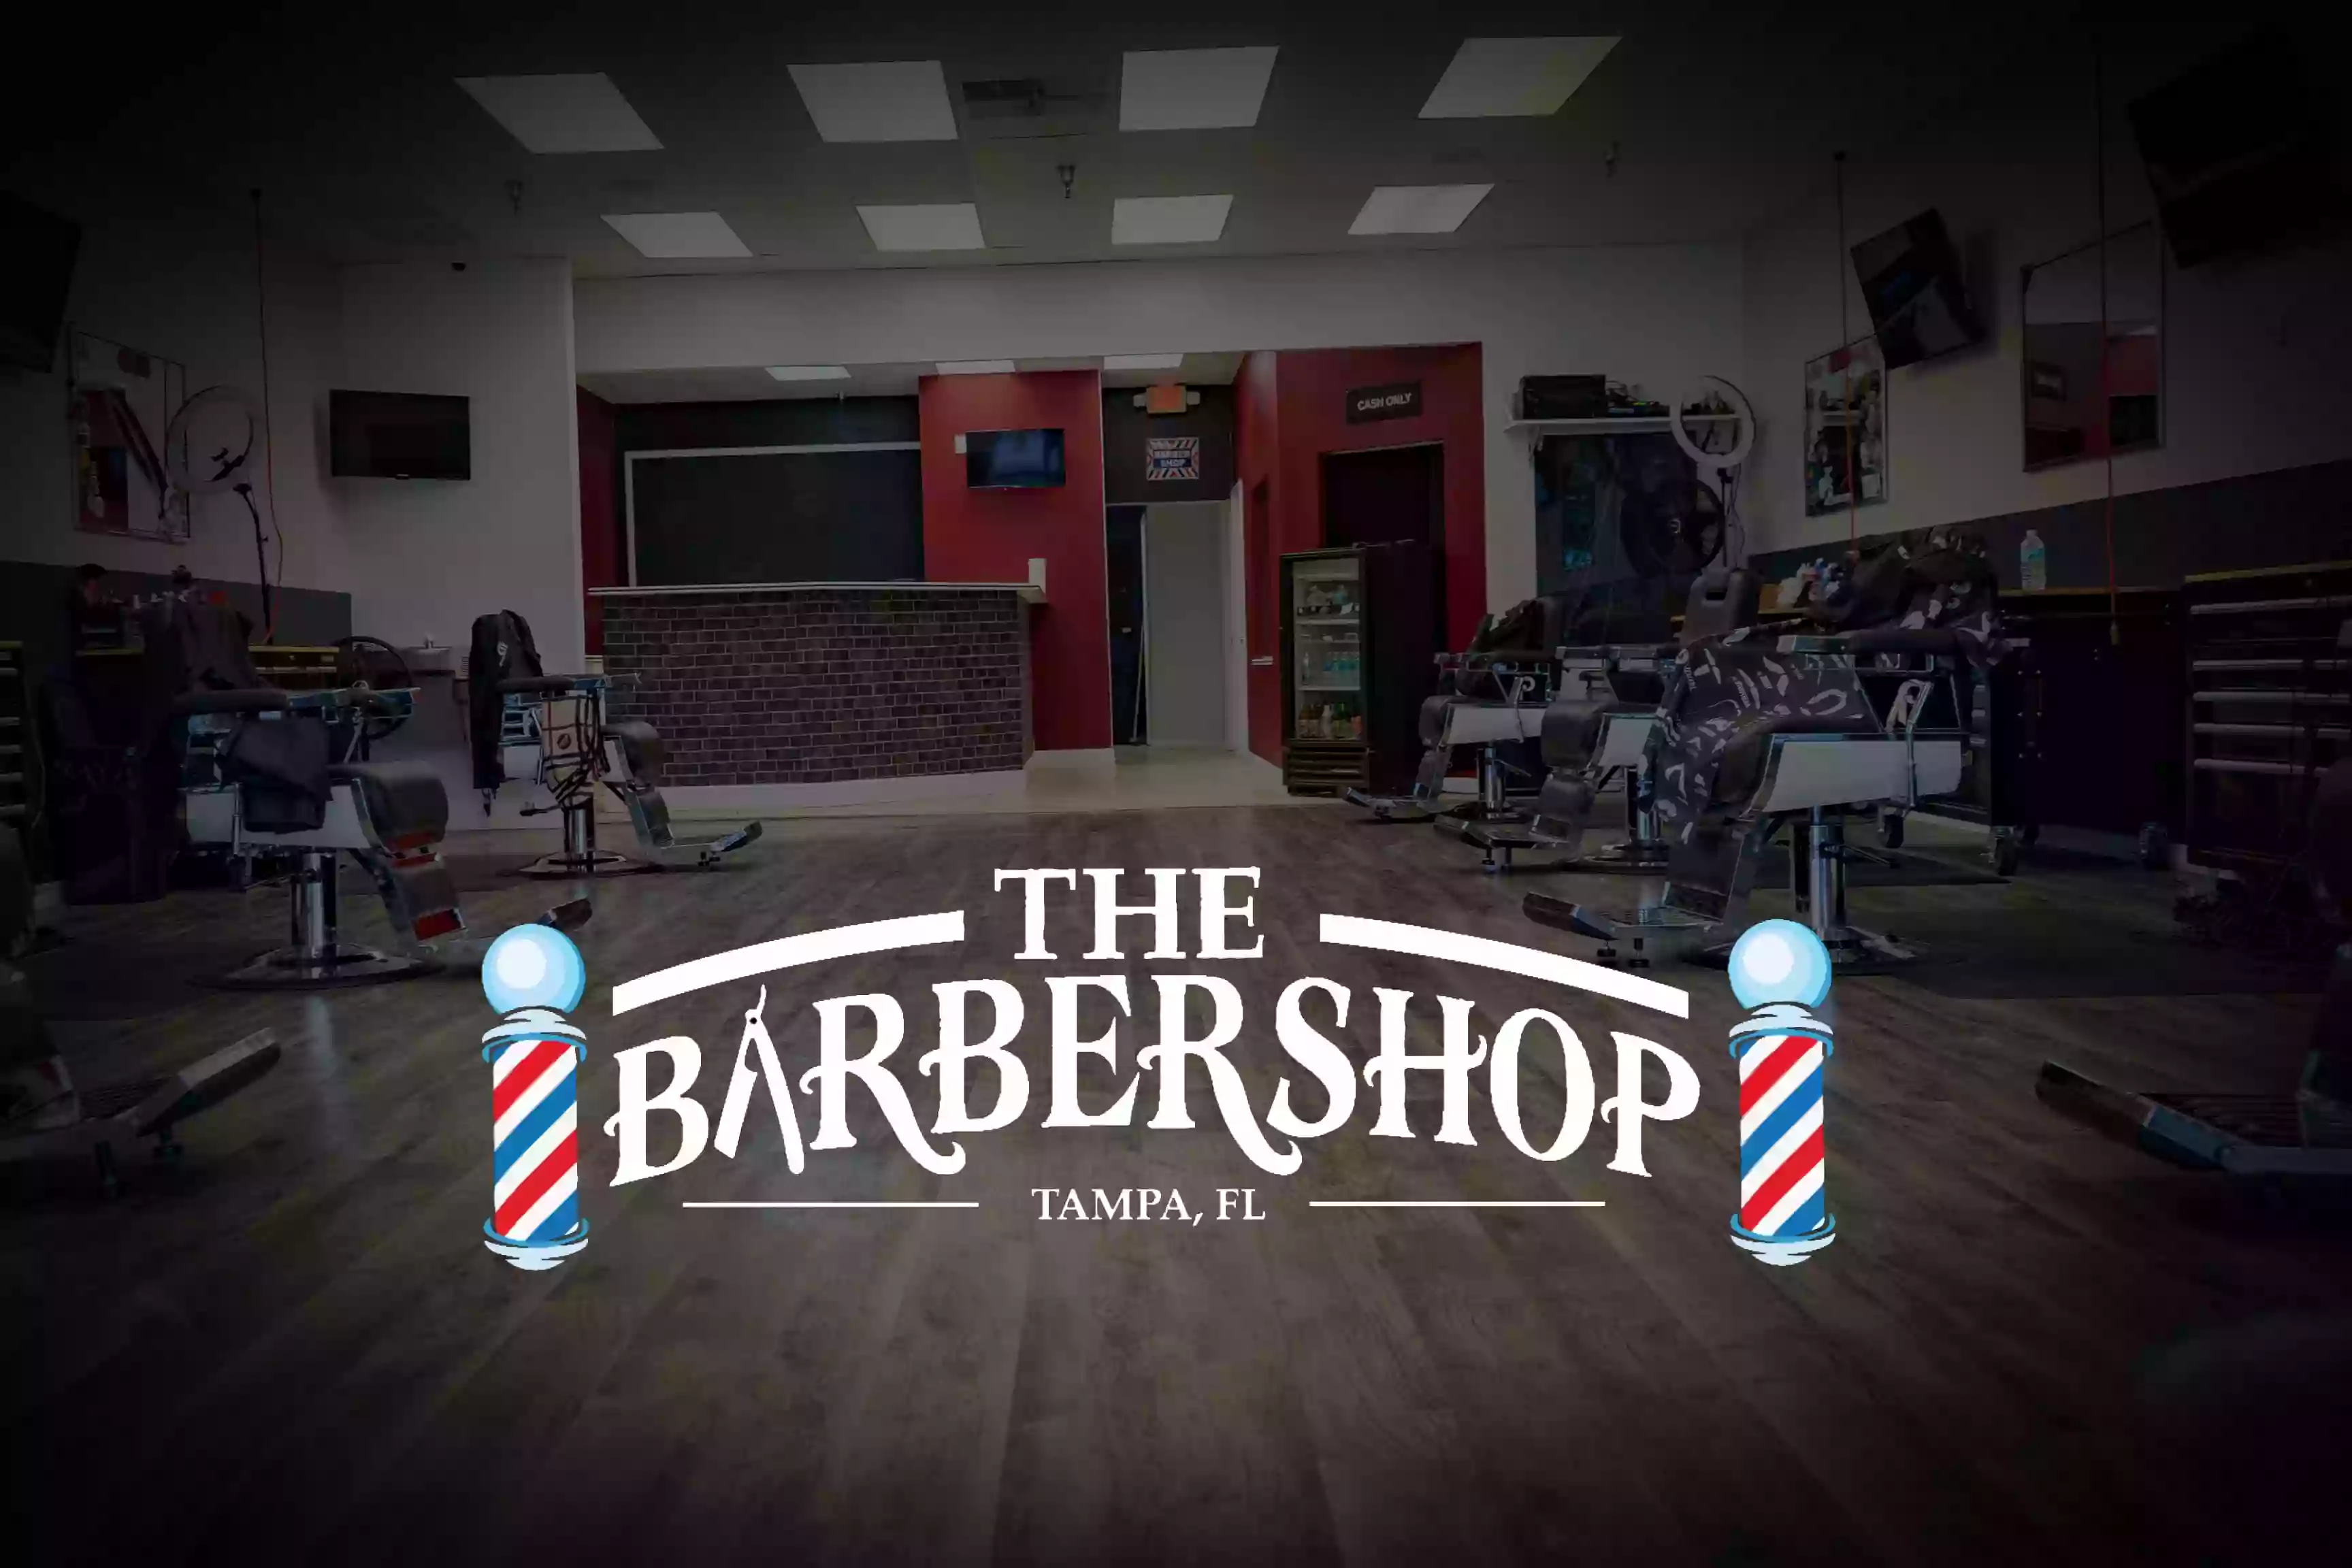 The Barbershop Tampa